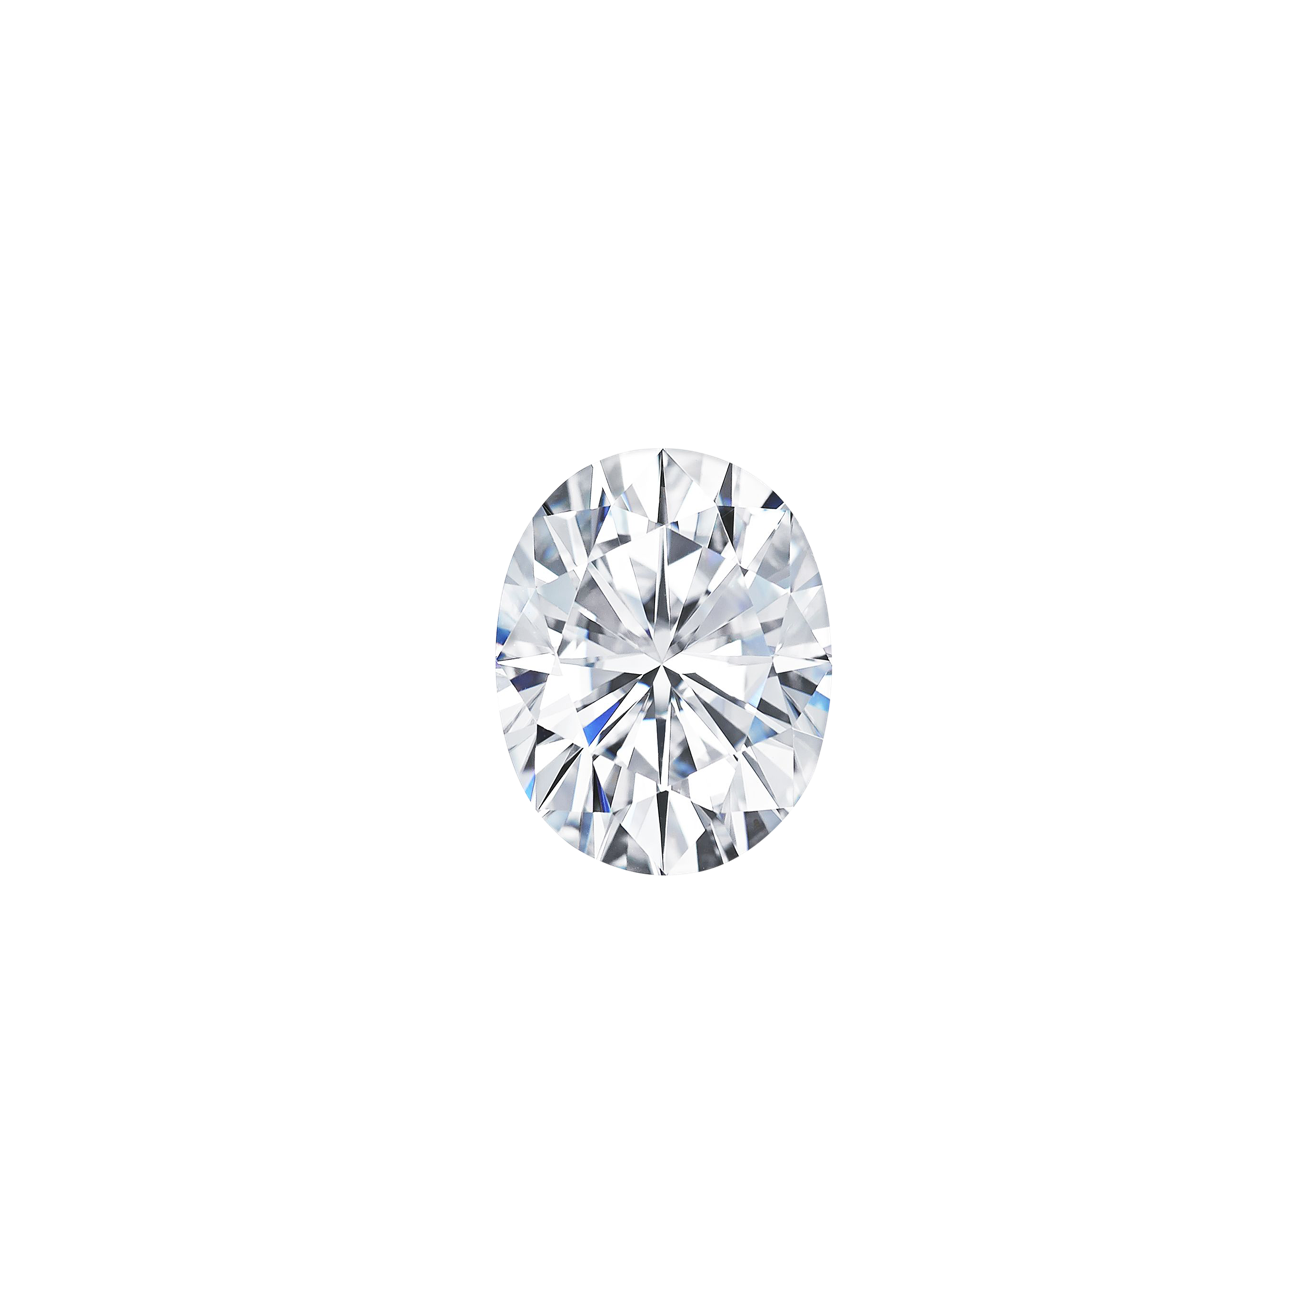 The Oval Diamond